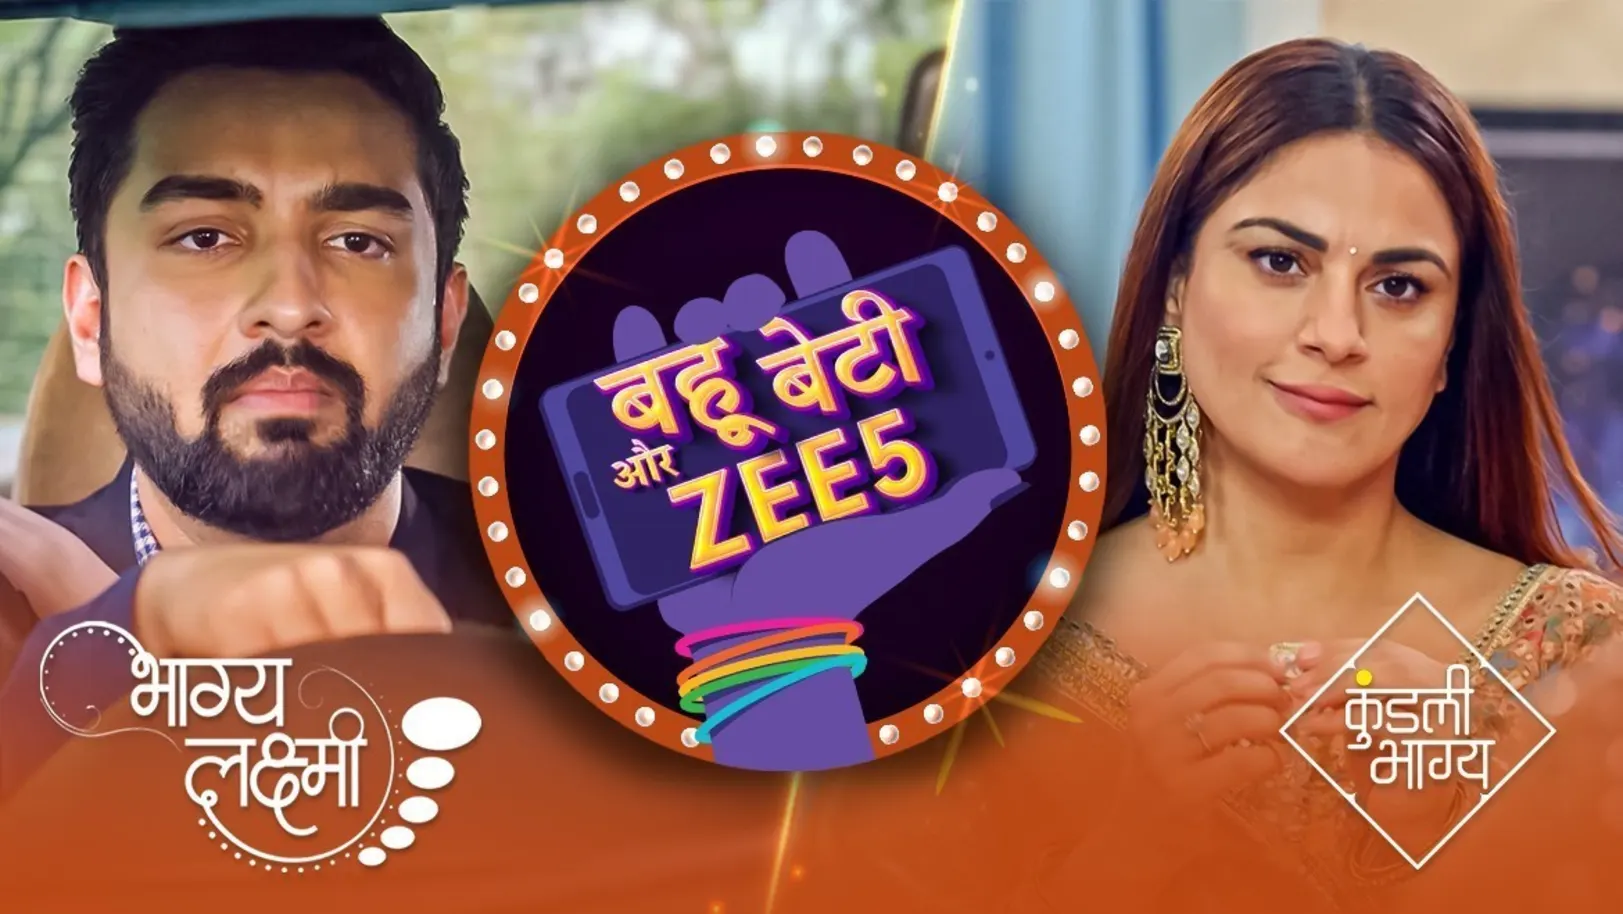 Will Long-Lost Lovers Reunite? | Behind the Scenes | Bahu Beti Aur ZEE5 Episode 13